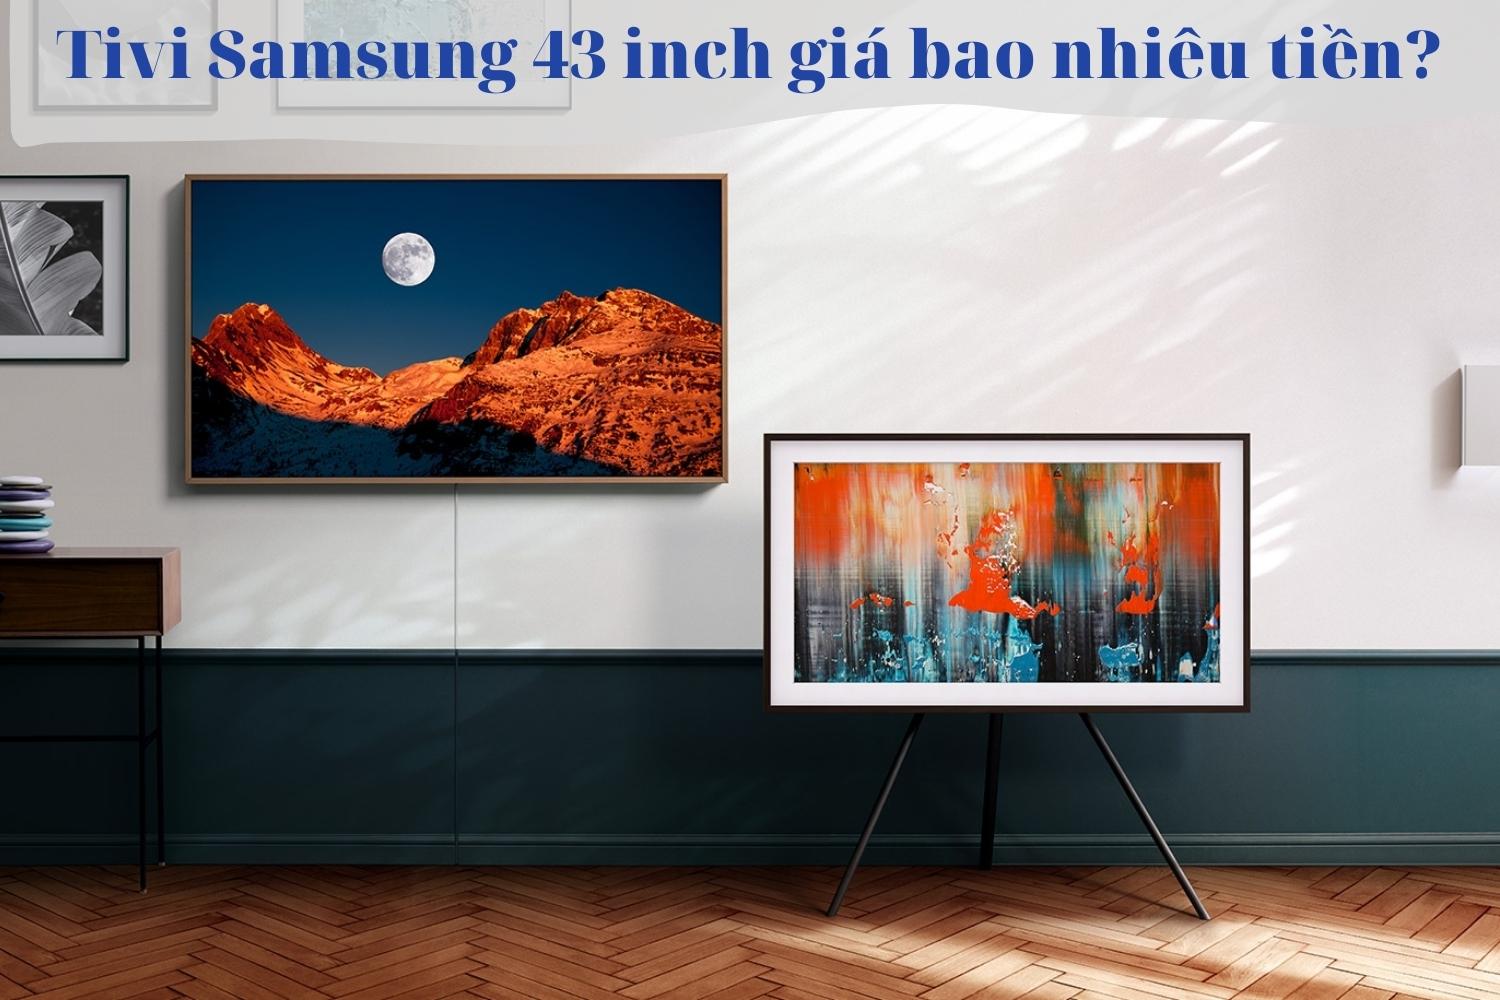 [Giải đáp] Tivi Samsung 43 inch giá bao nhiêu tiền?